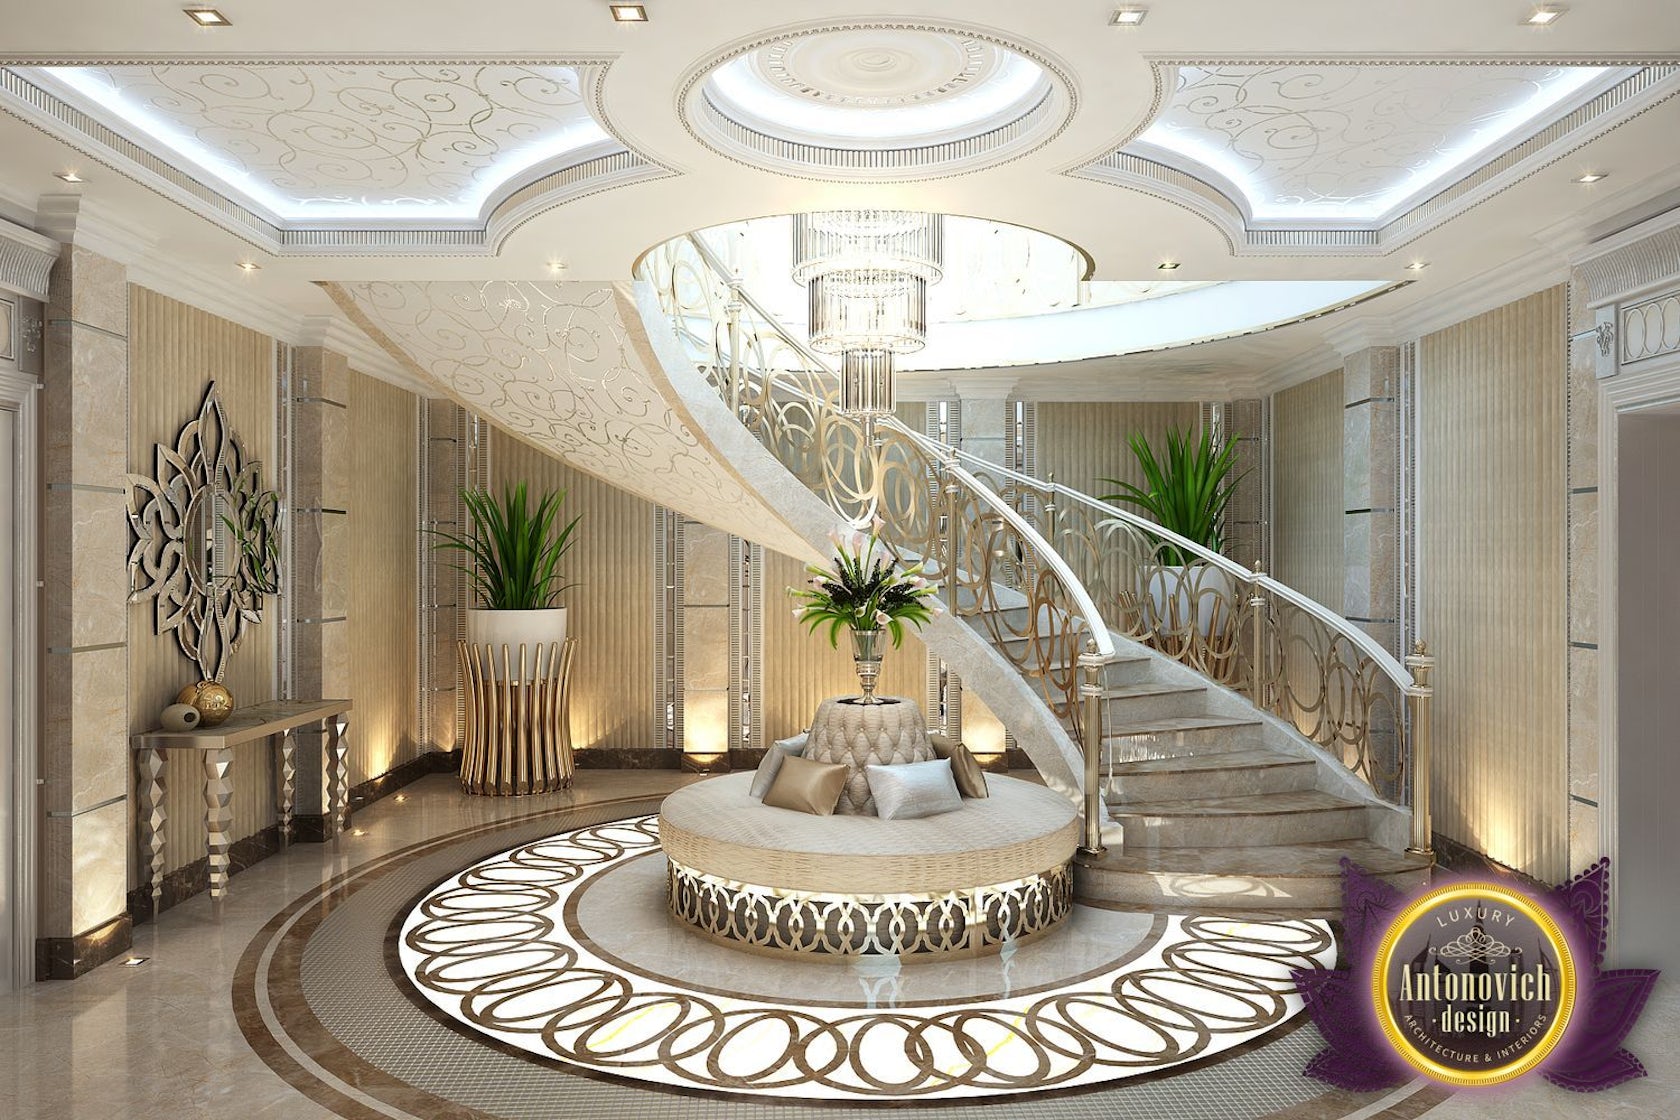 Living Room Decoration Ideas By Luxury Antonovich Design On